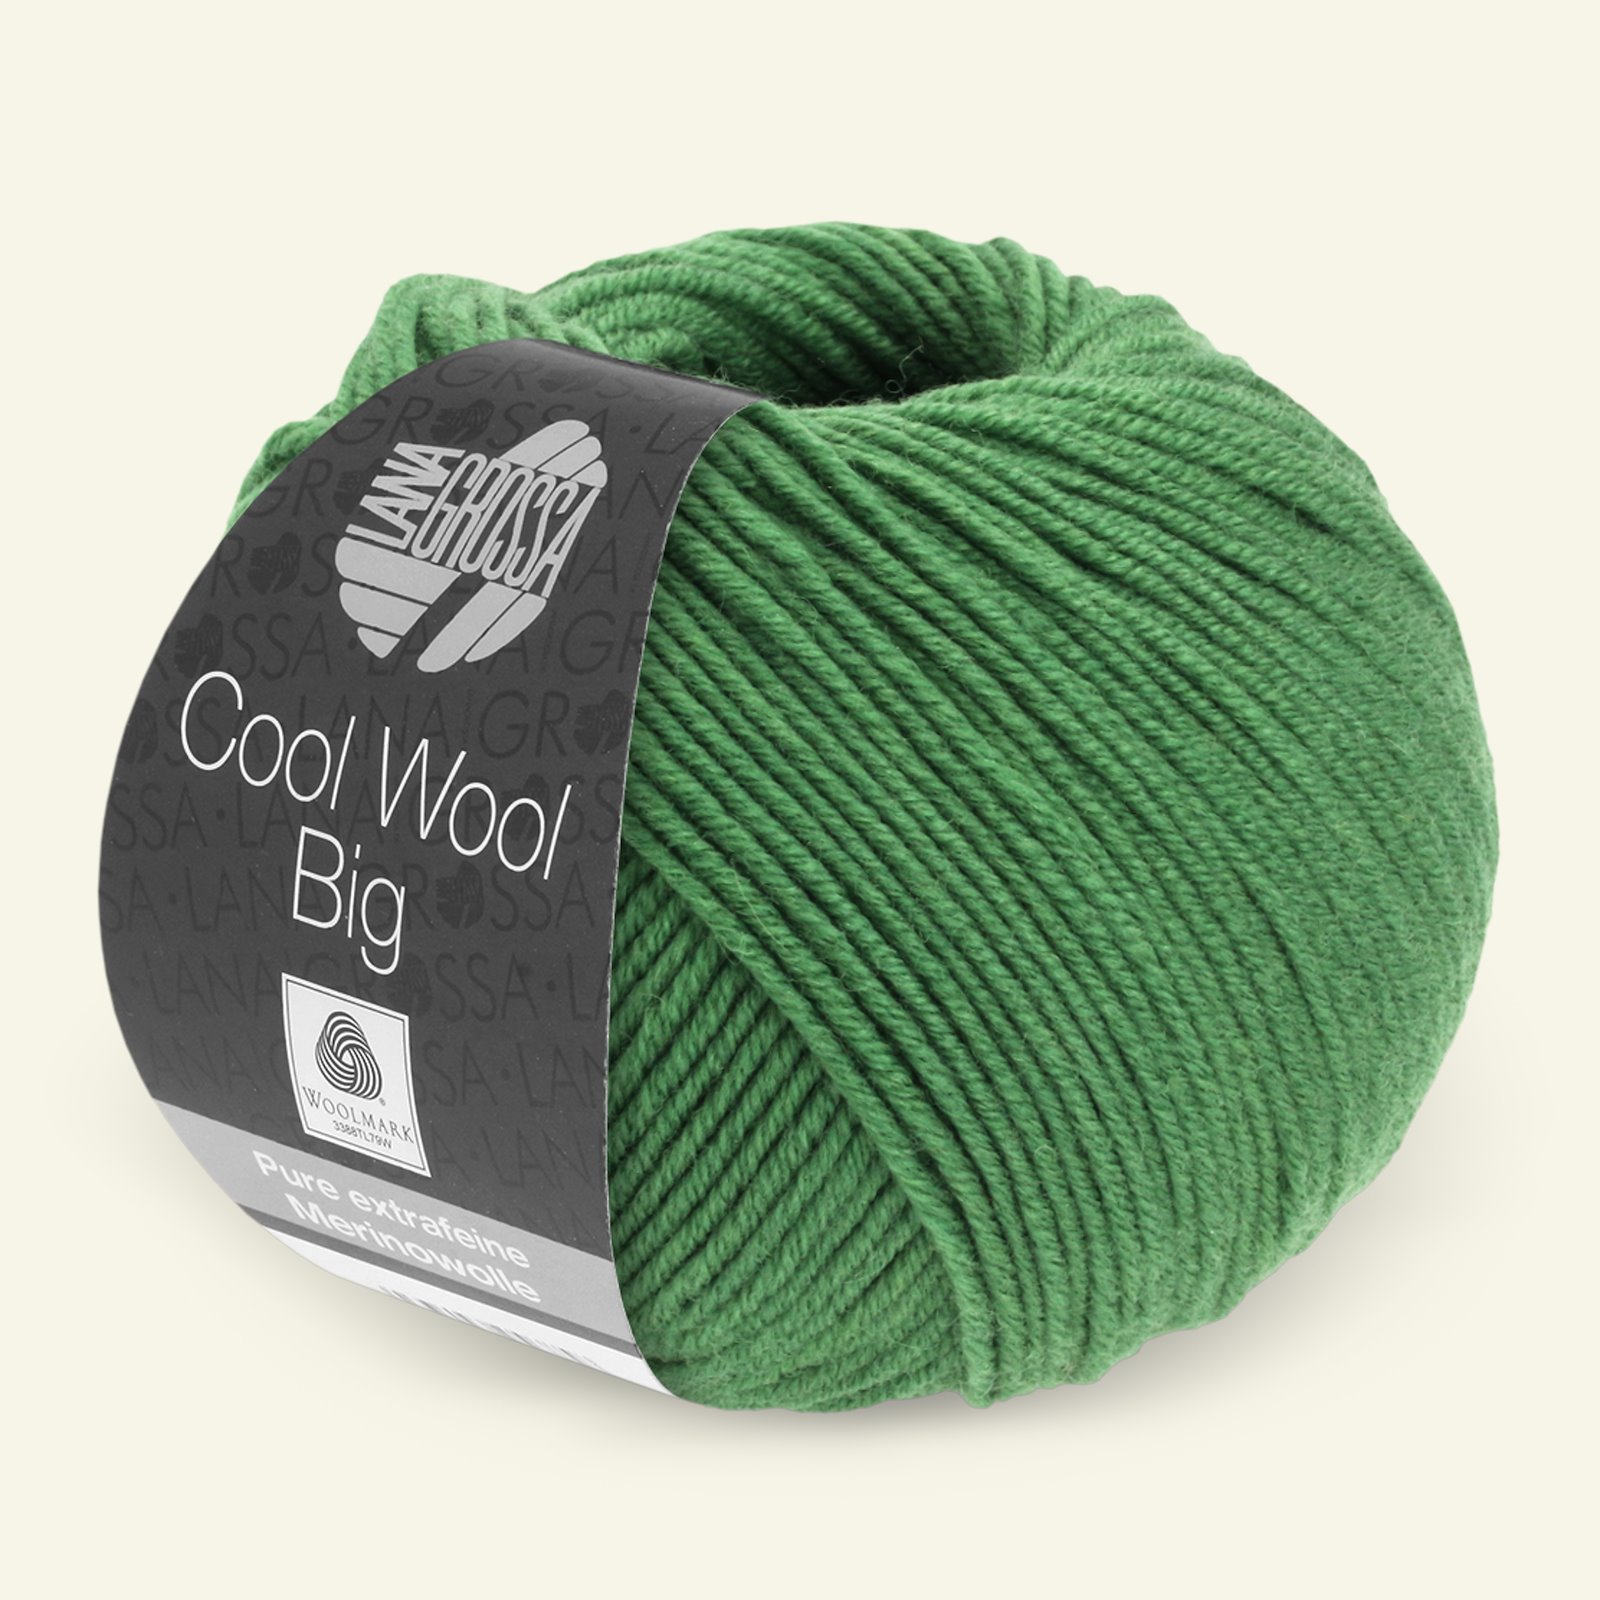 Lana Grossa, extrafine merino wool yarn "Cool Wool Big", green 90001106_pack